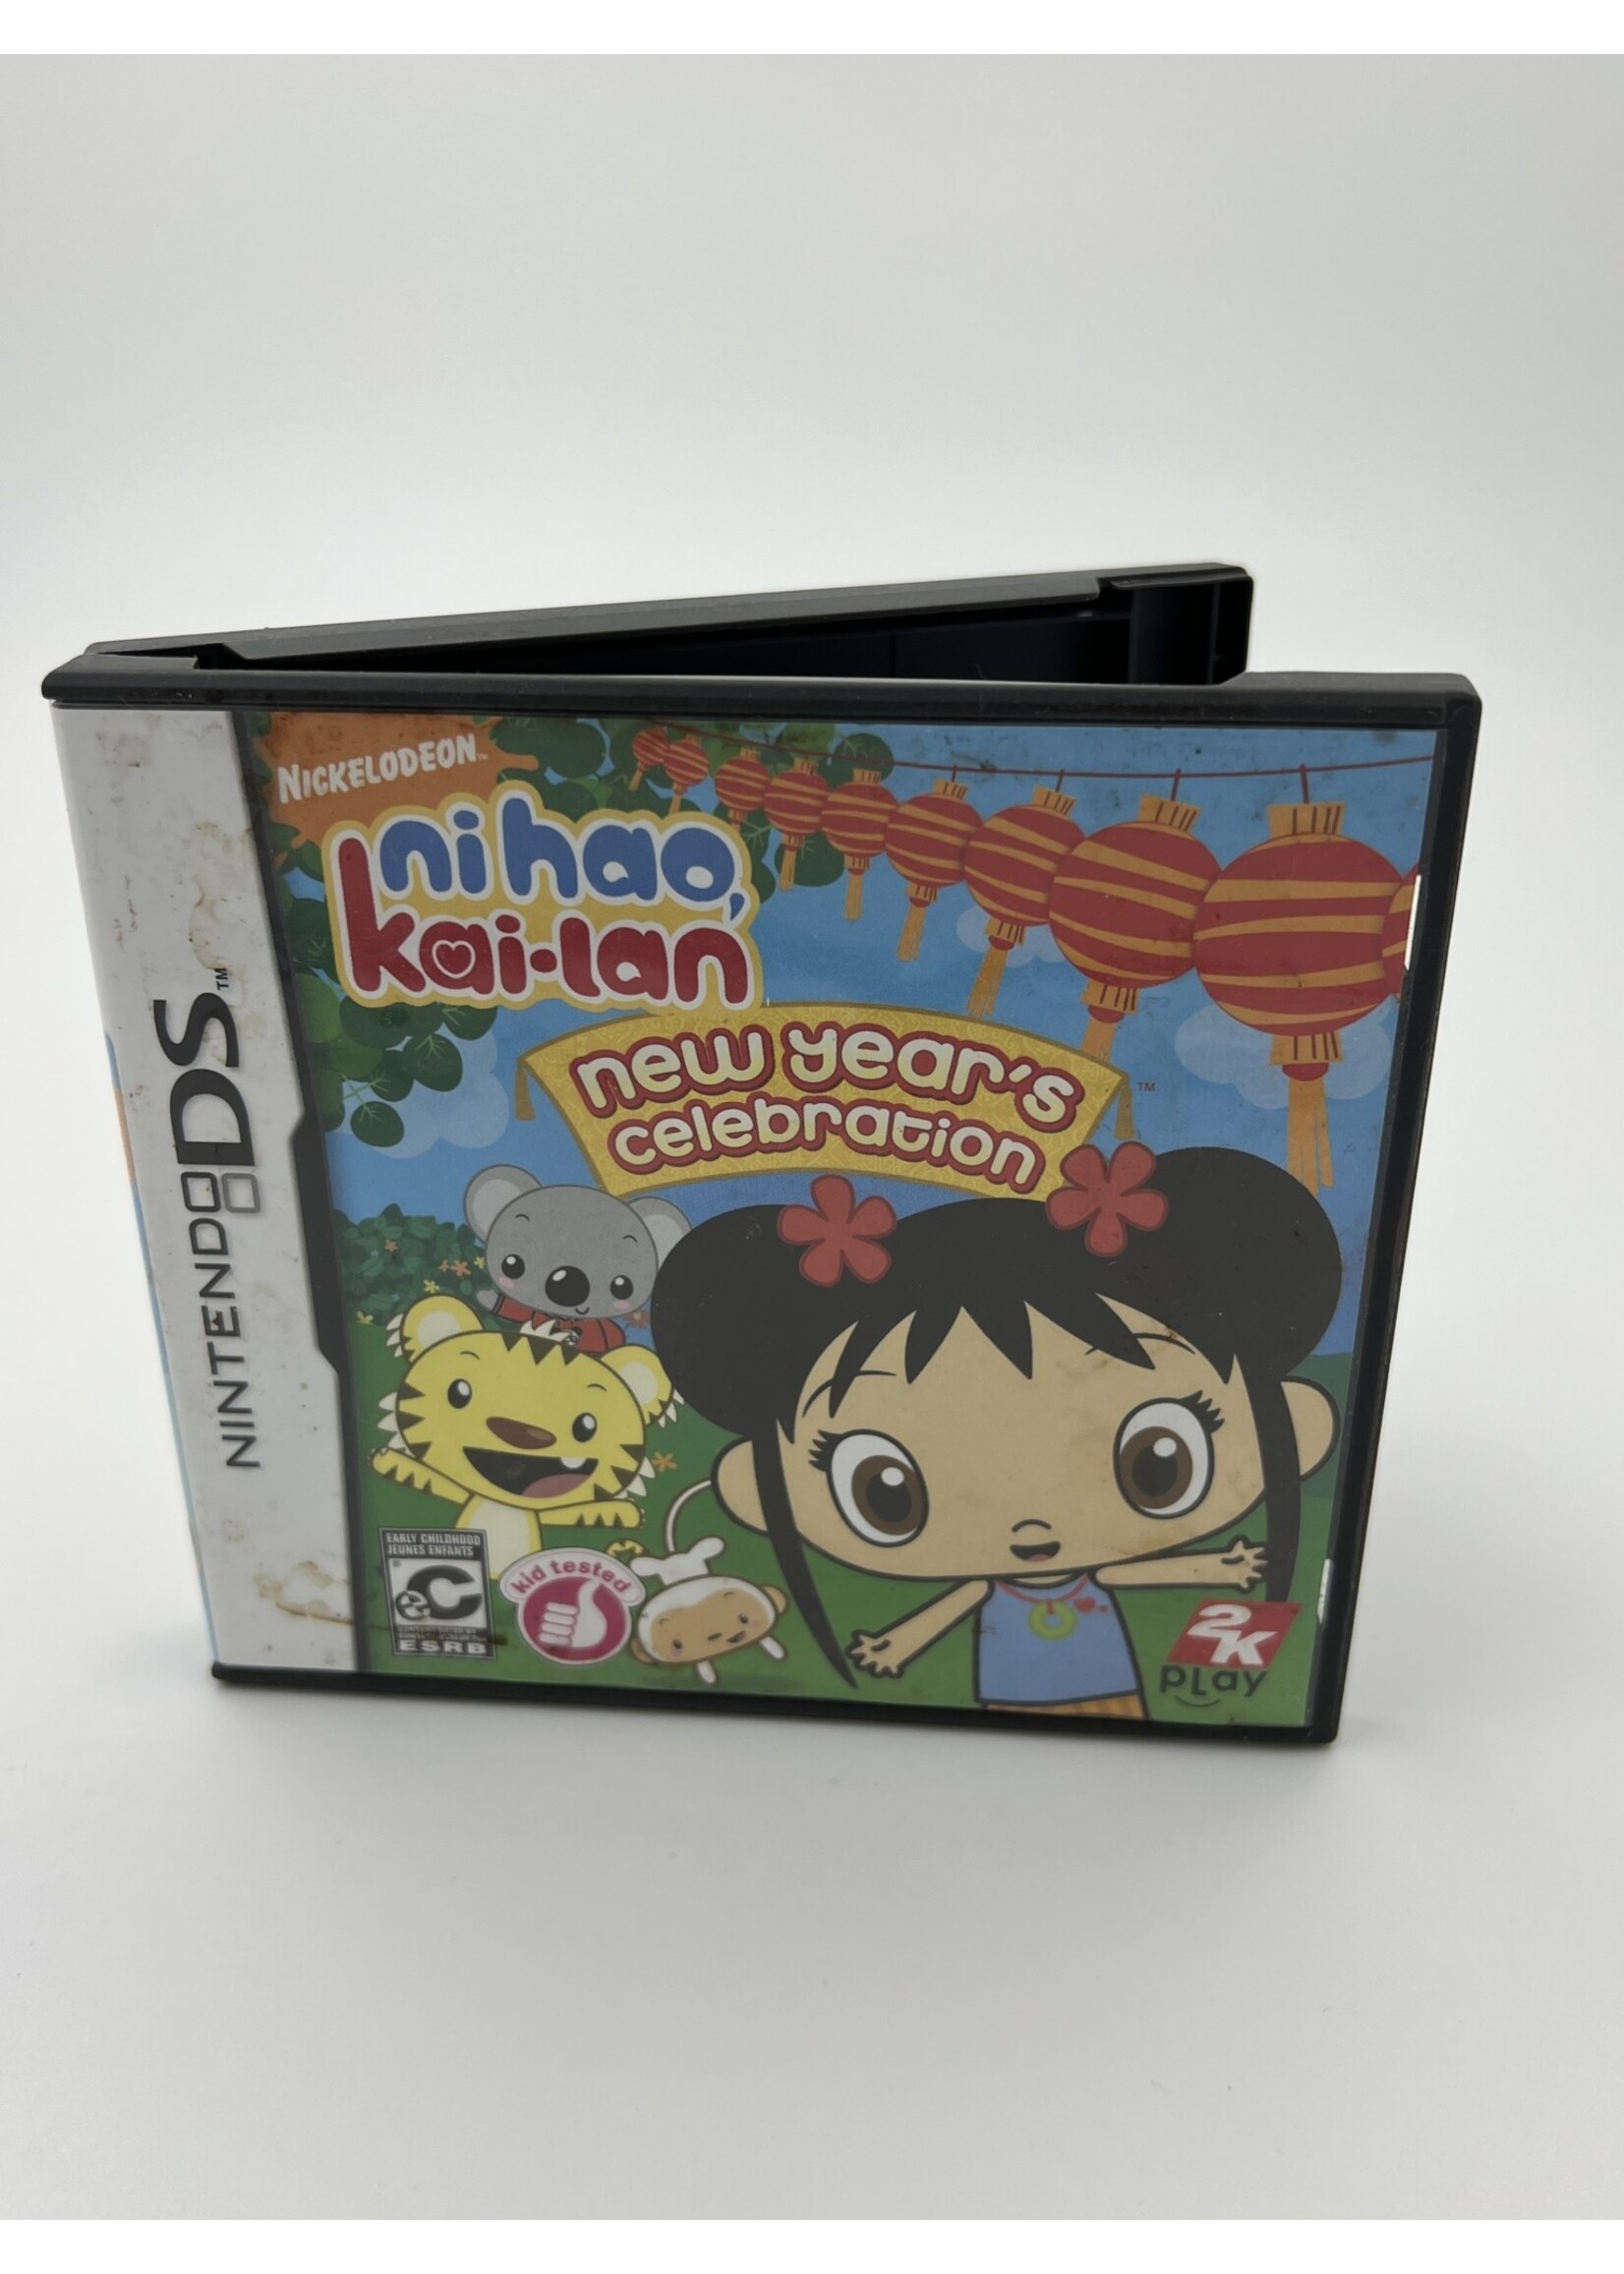 Nintendo   Nickelodeon Nihao Kailan New Years Celebration DS